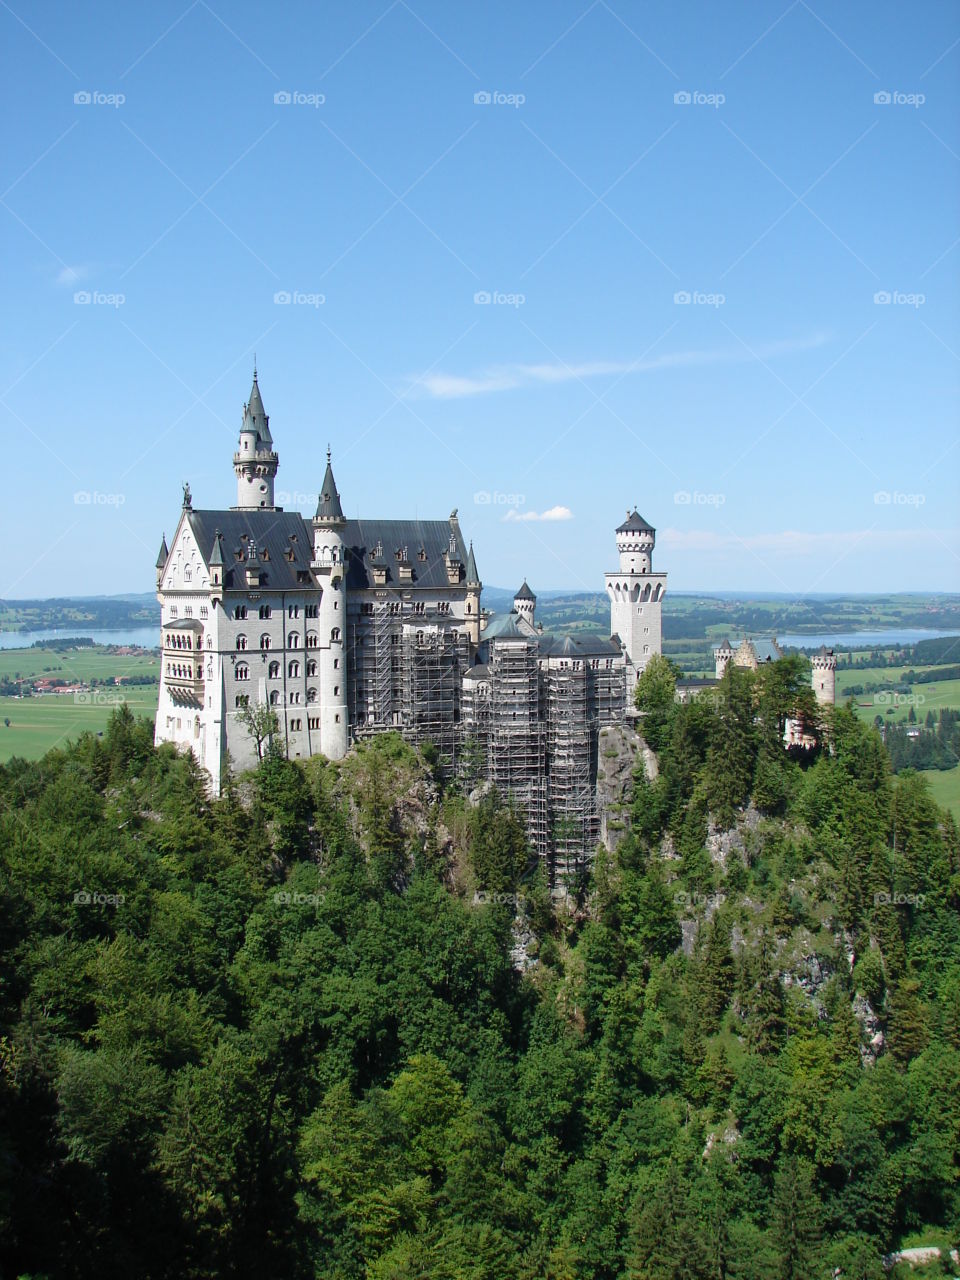 Disney castel Germany